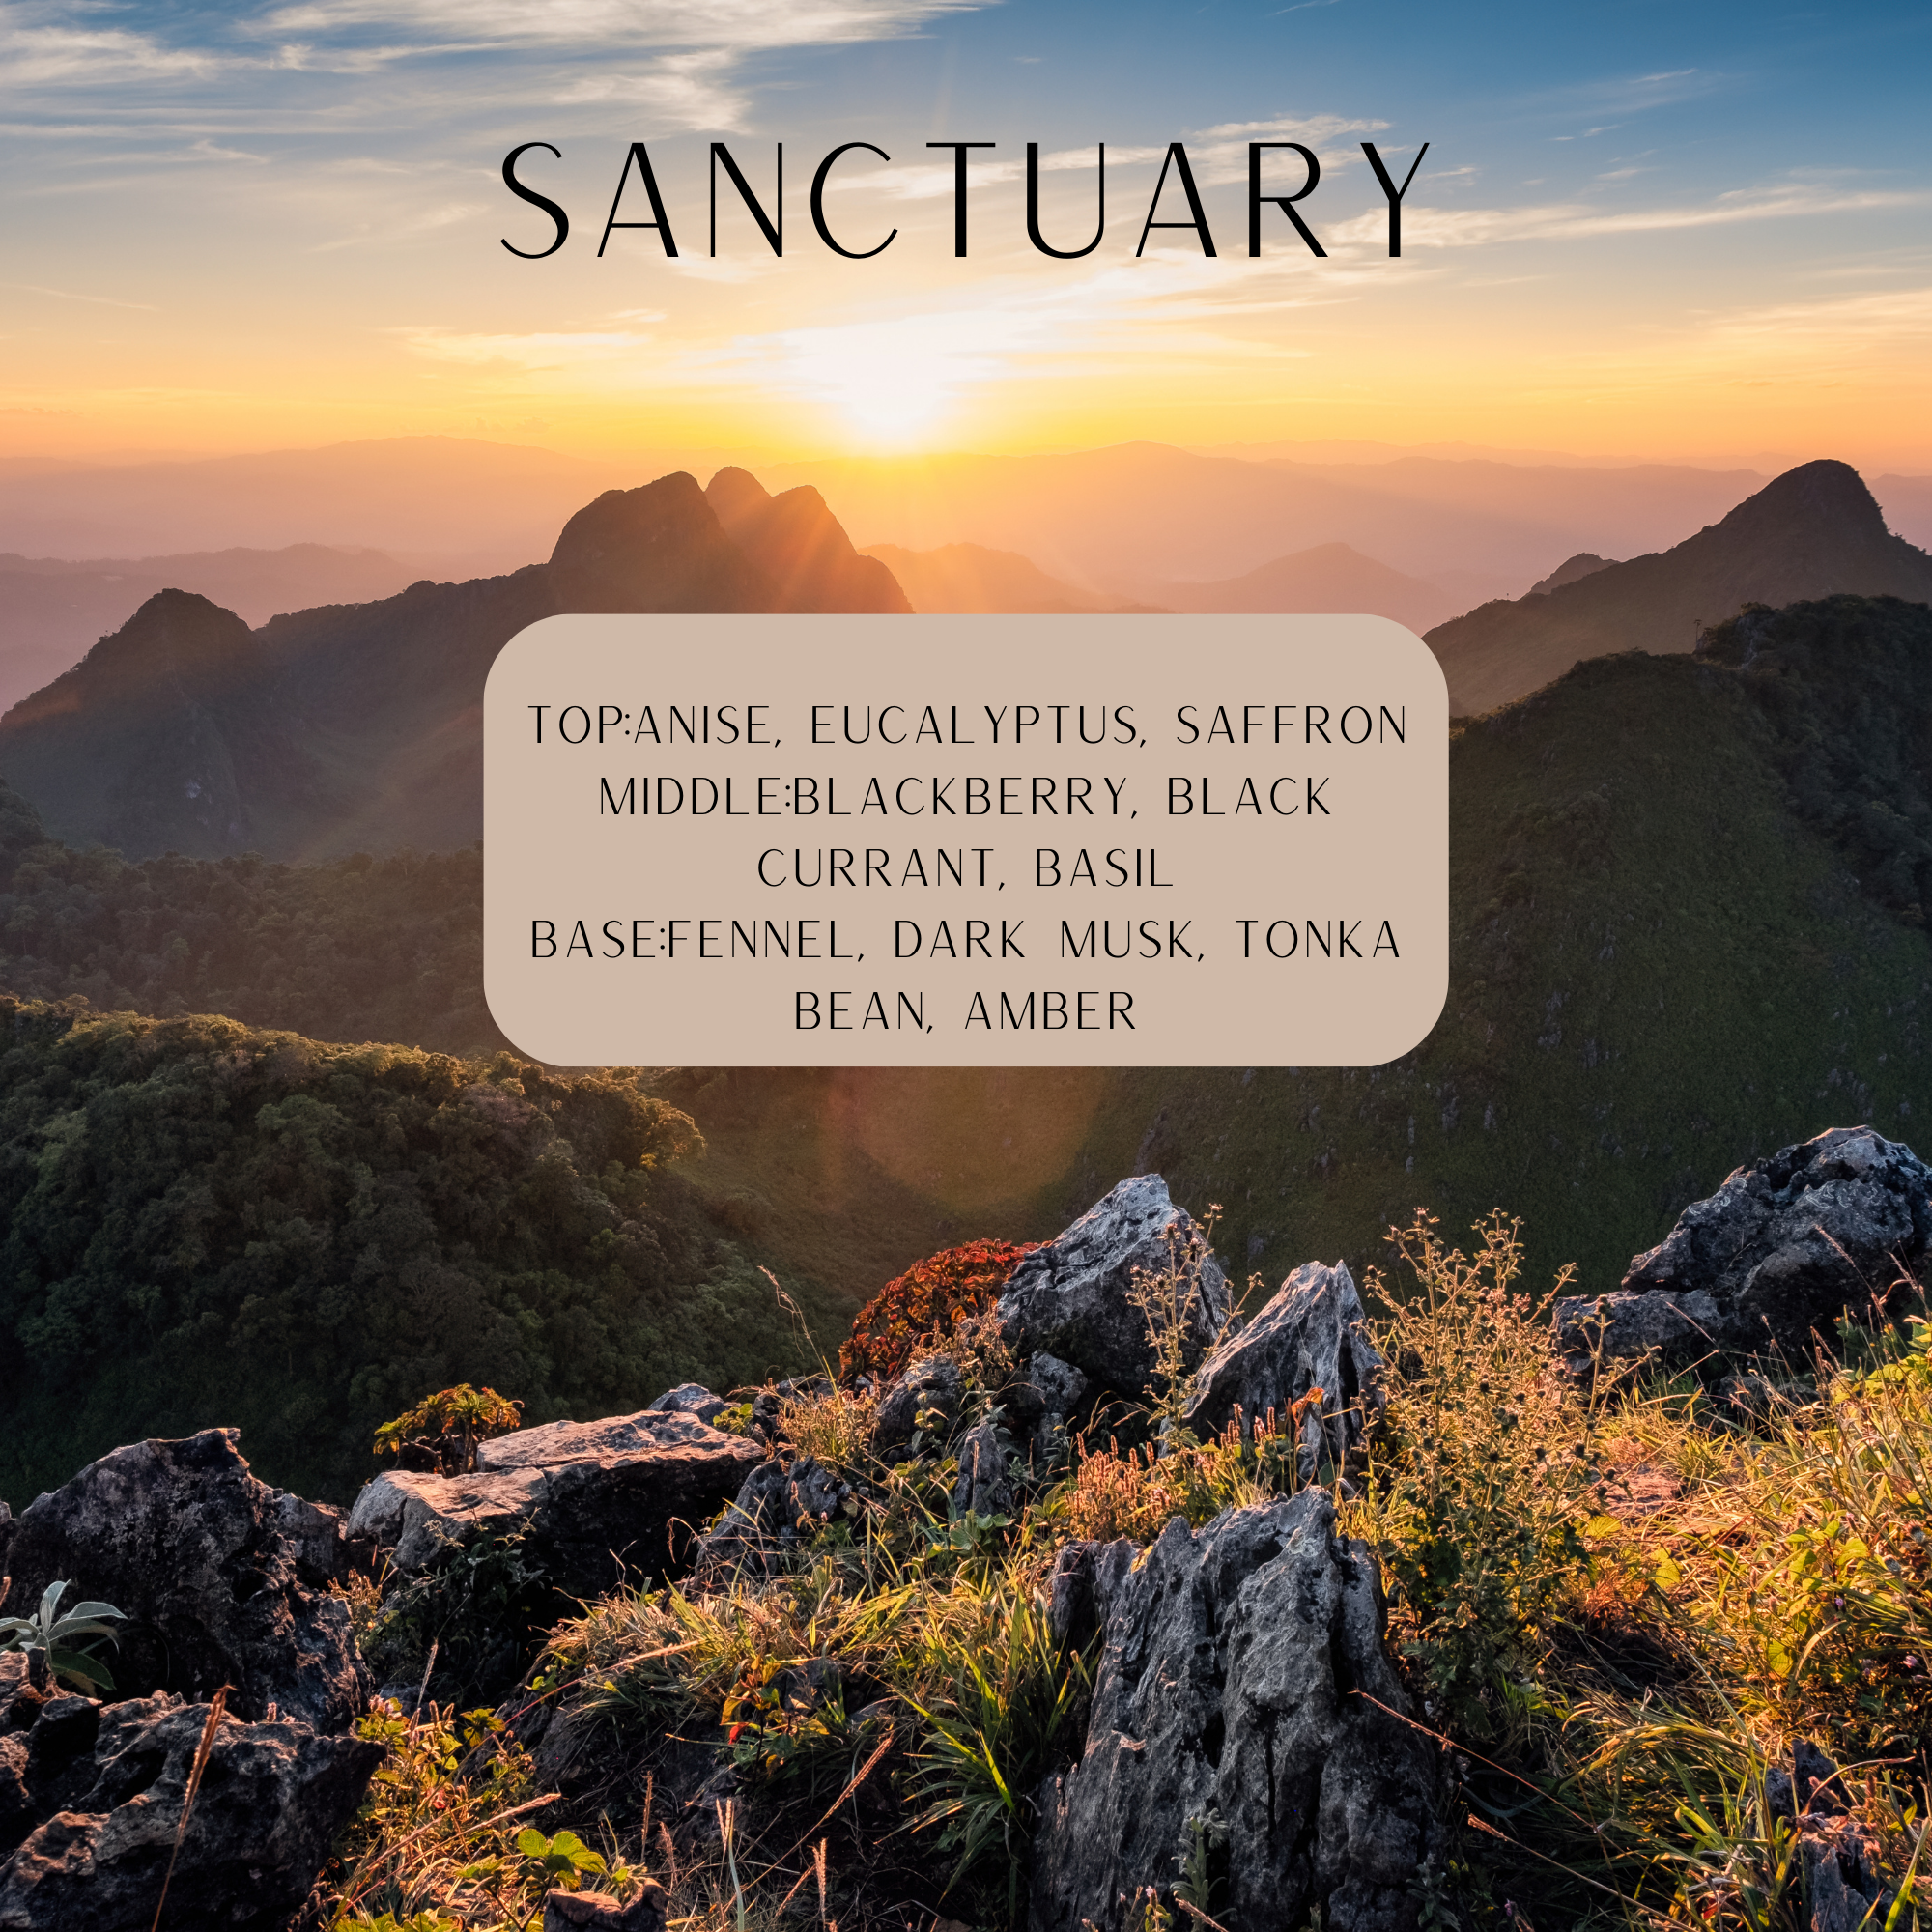 beautiful sunrise over a mountaintop says sanctuary top: anise, eucalyptus, saffron middle: blackberry, black currant, basil base: fennel, dark musk, tonka bean, amber